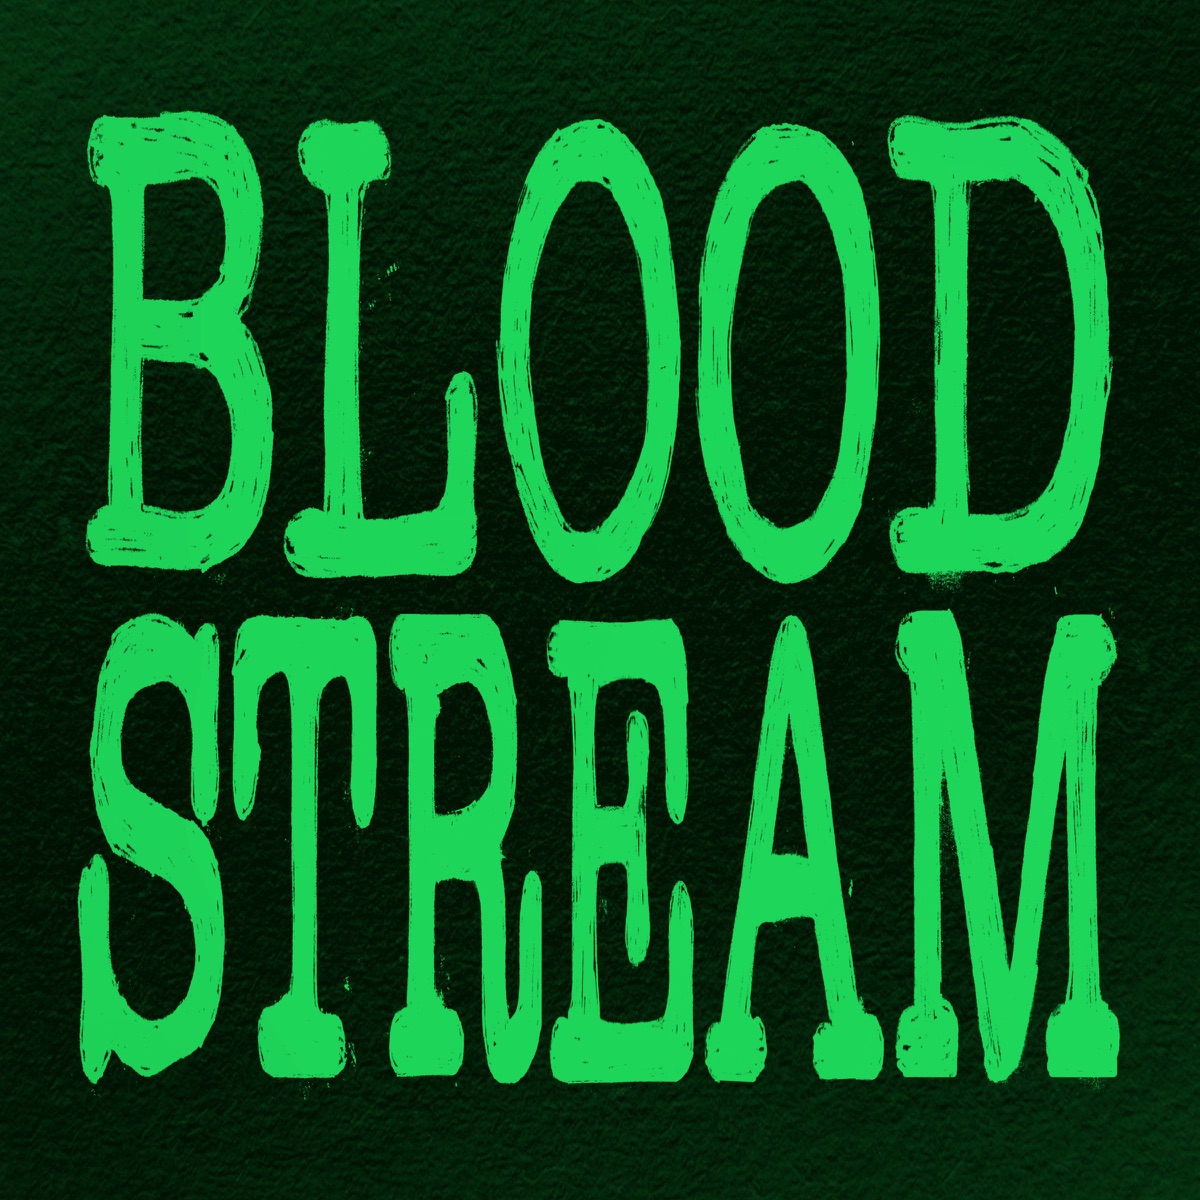 Ed Sheeran & Rudimental Bloodstream cover artwork